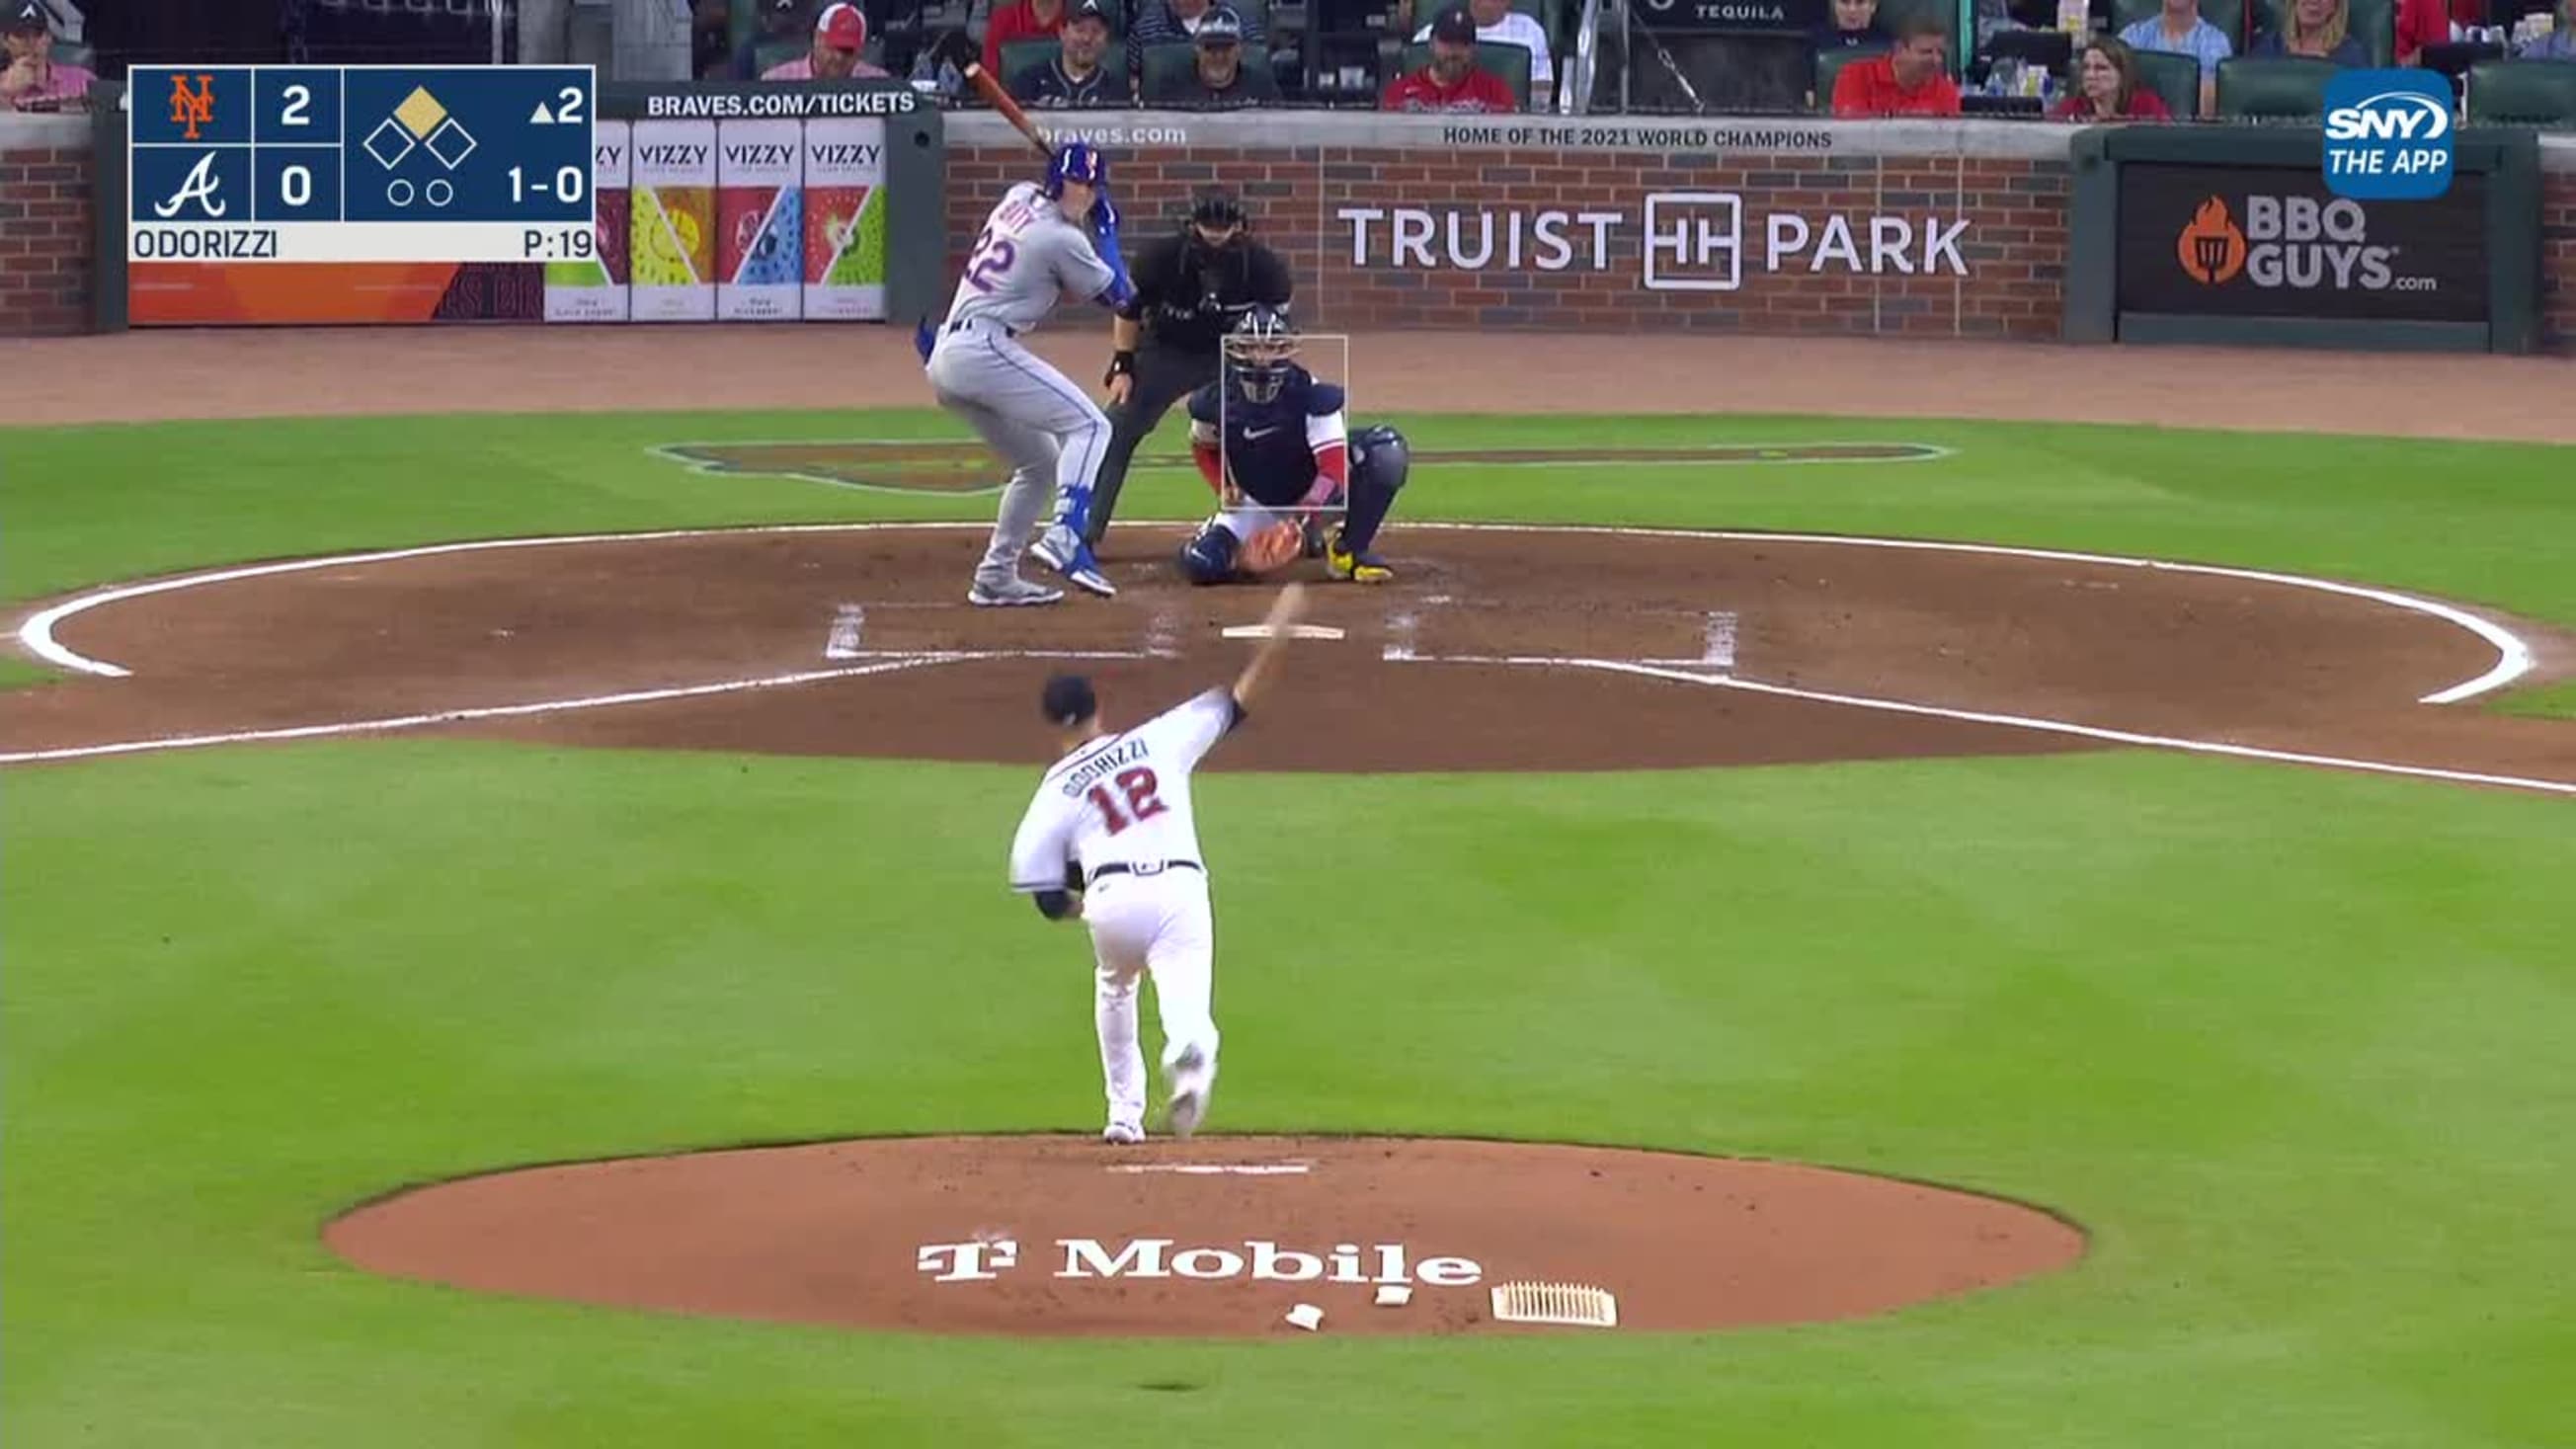 Brett Baty hits home run for NY Mets in rousing MLB debut